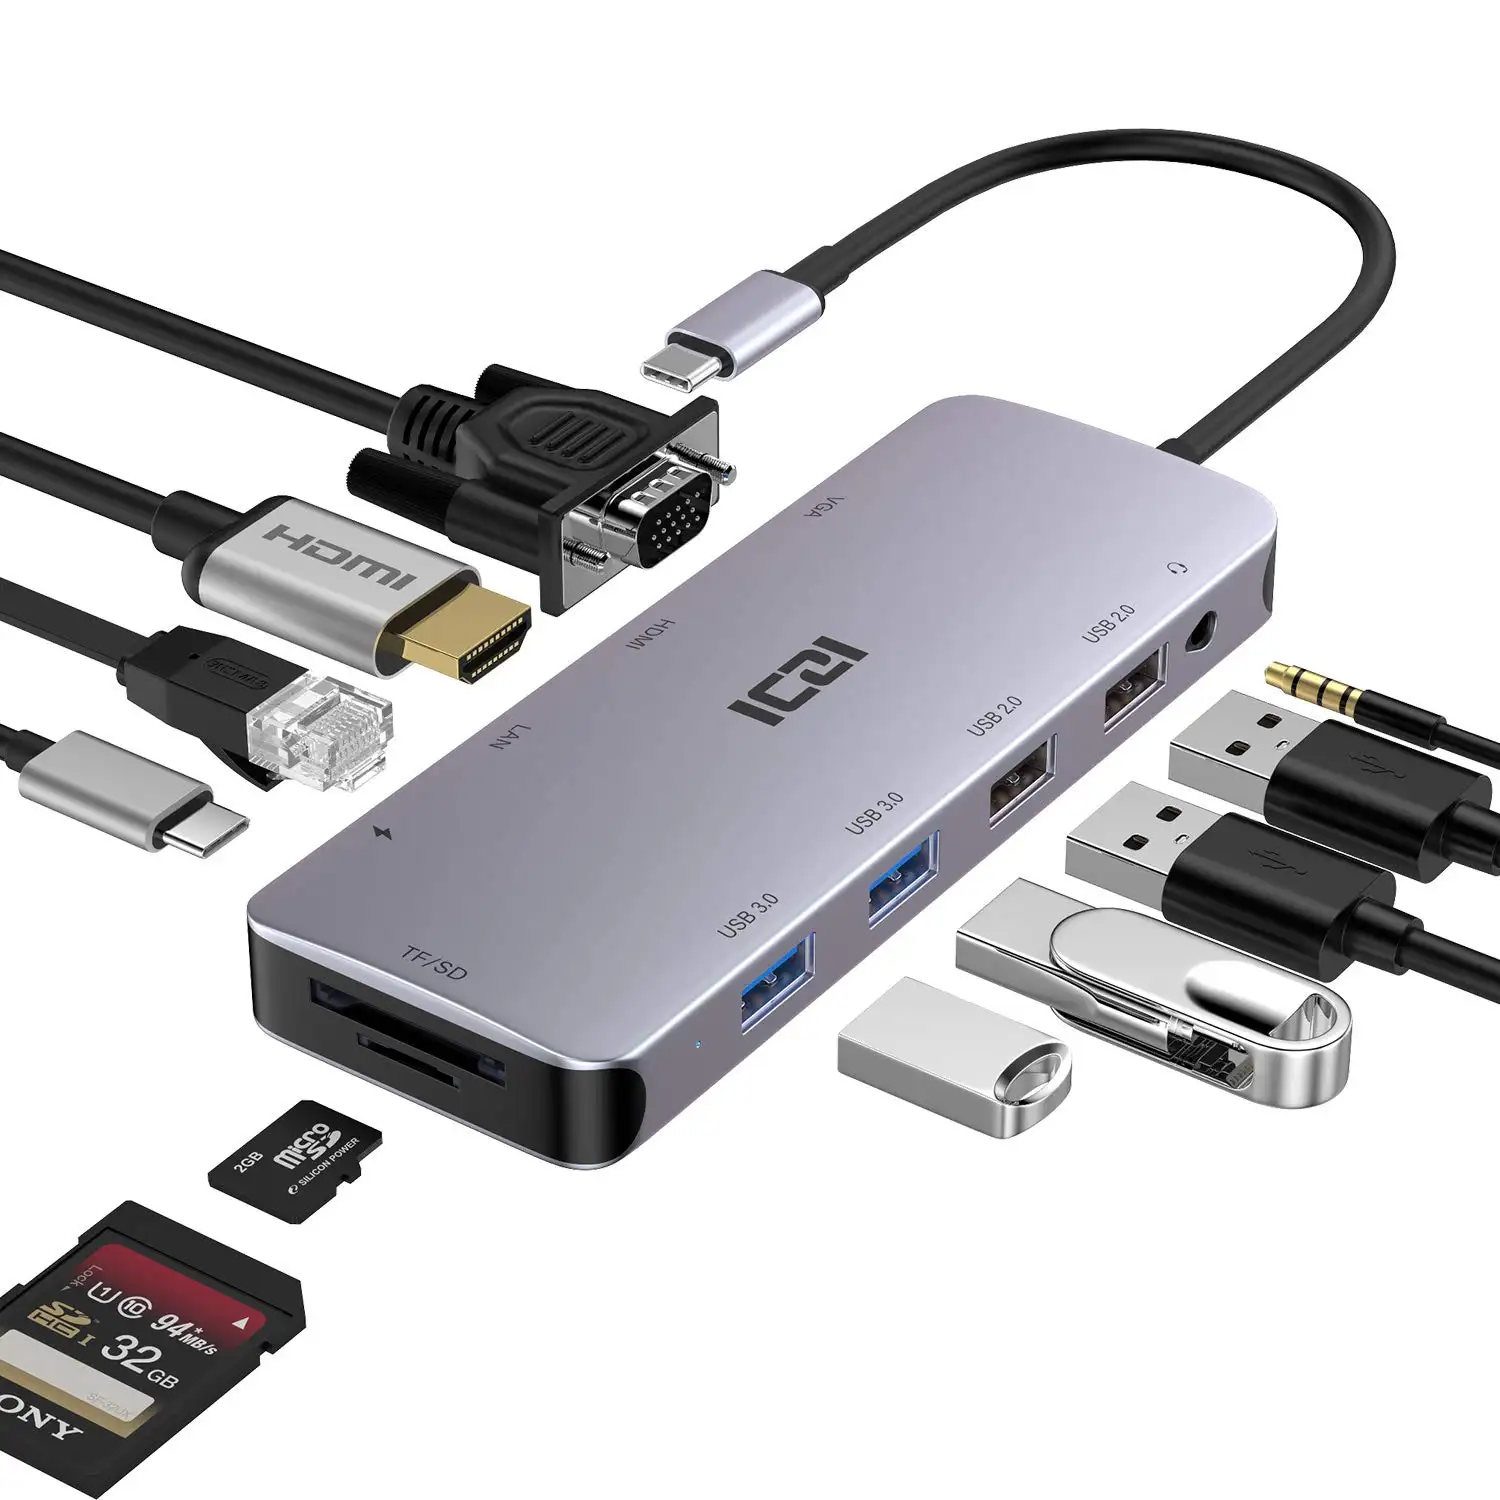 ICZI 11 in 1 Type C Hub With 1000M RJ45 And VGA USB C Hub To 4 ports USB 3.0 usb c Adapter multiport dock for macbook pro